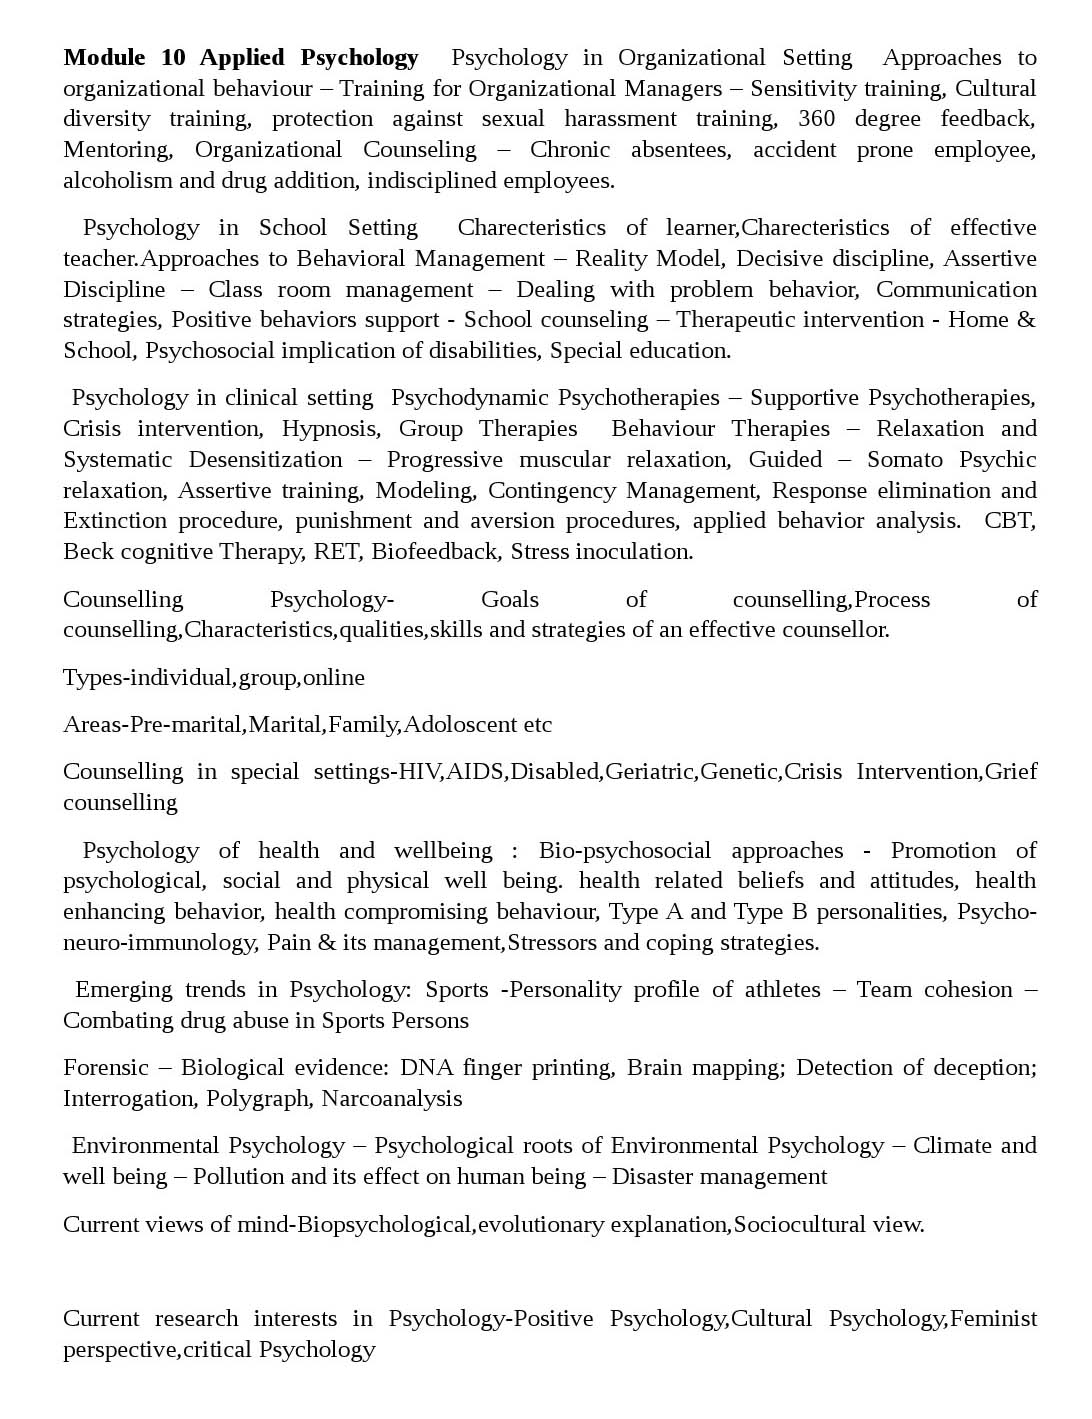 Kerala PSC Assistant Professor Psychology Exam Syllabus - Notification Image 5